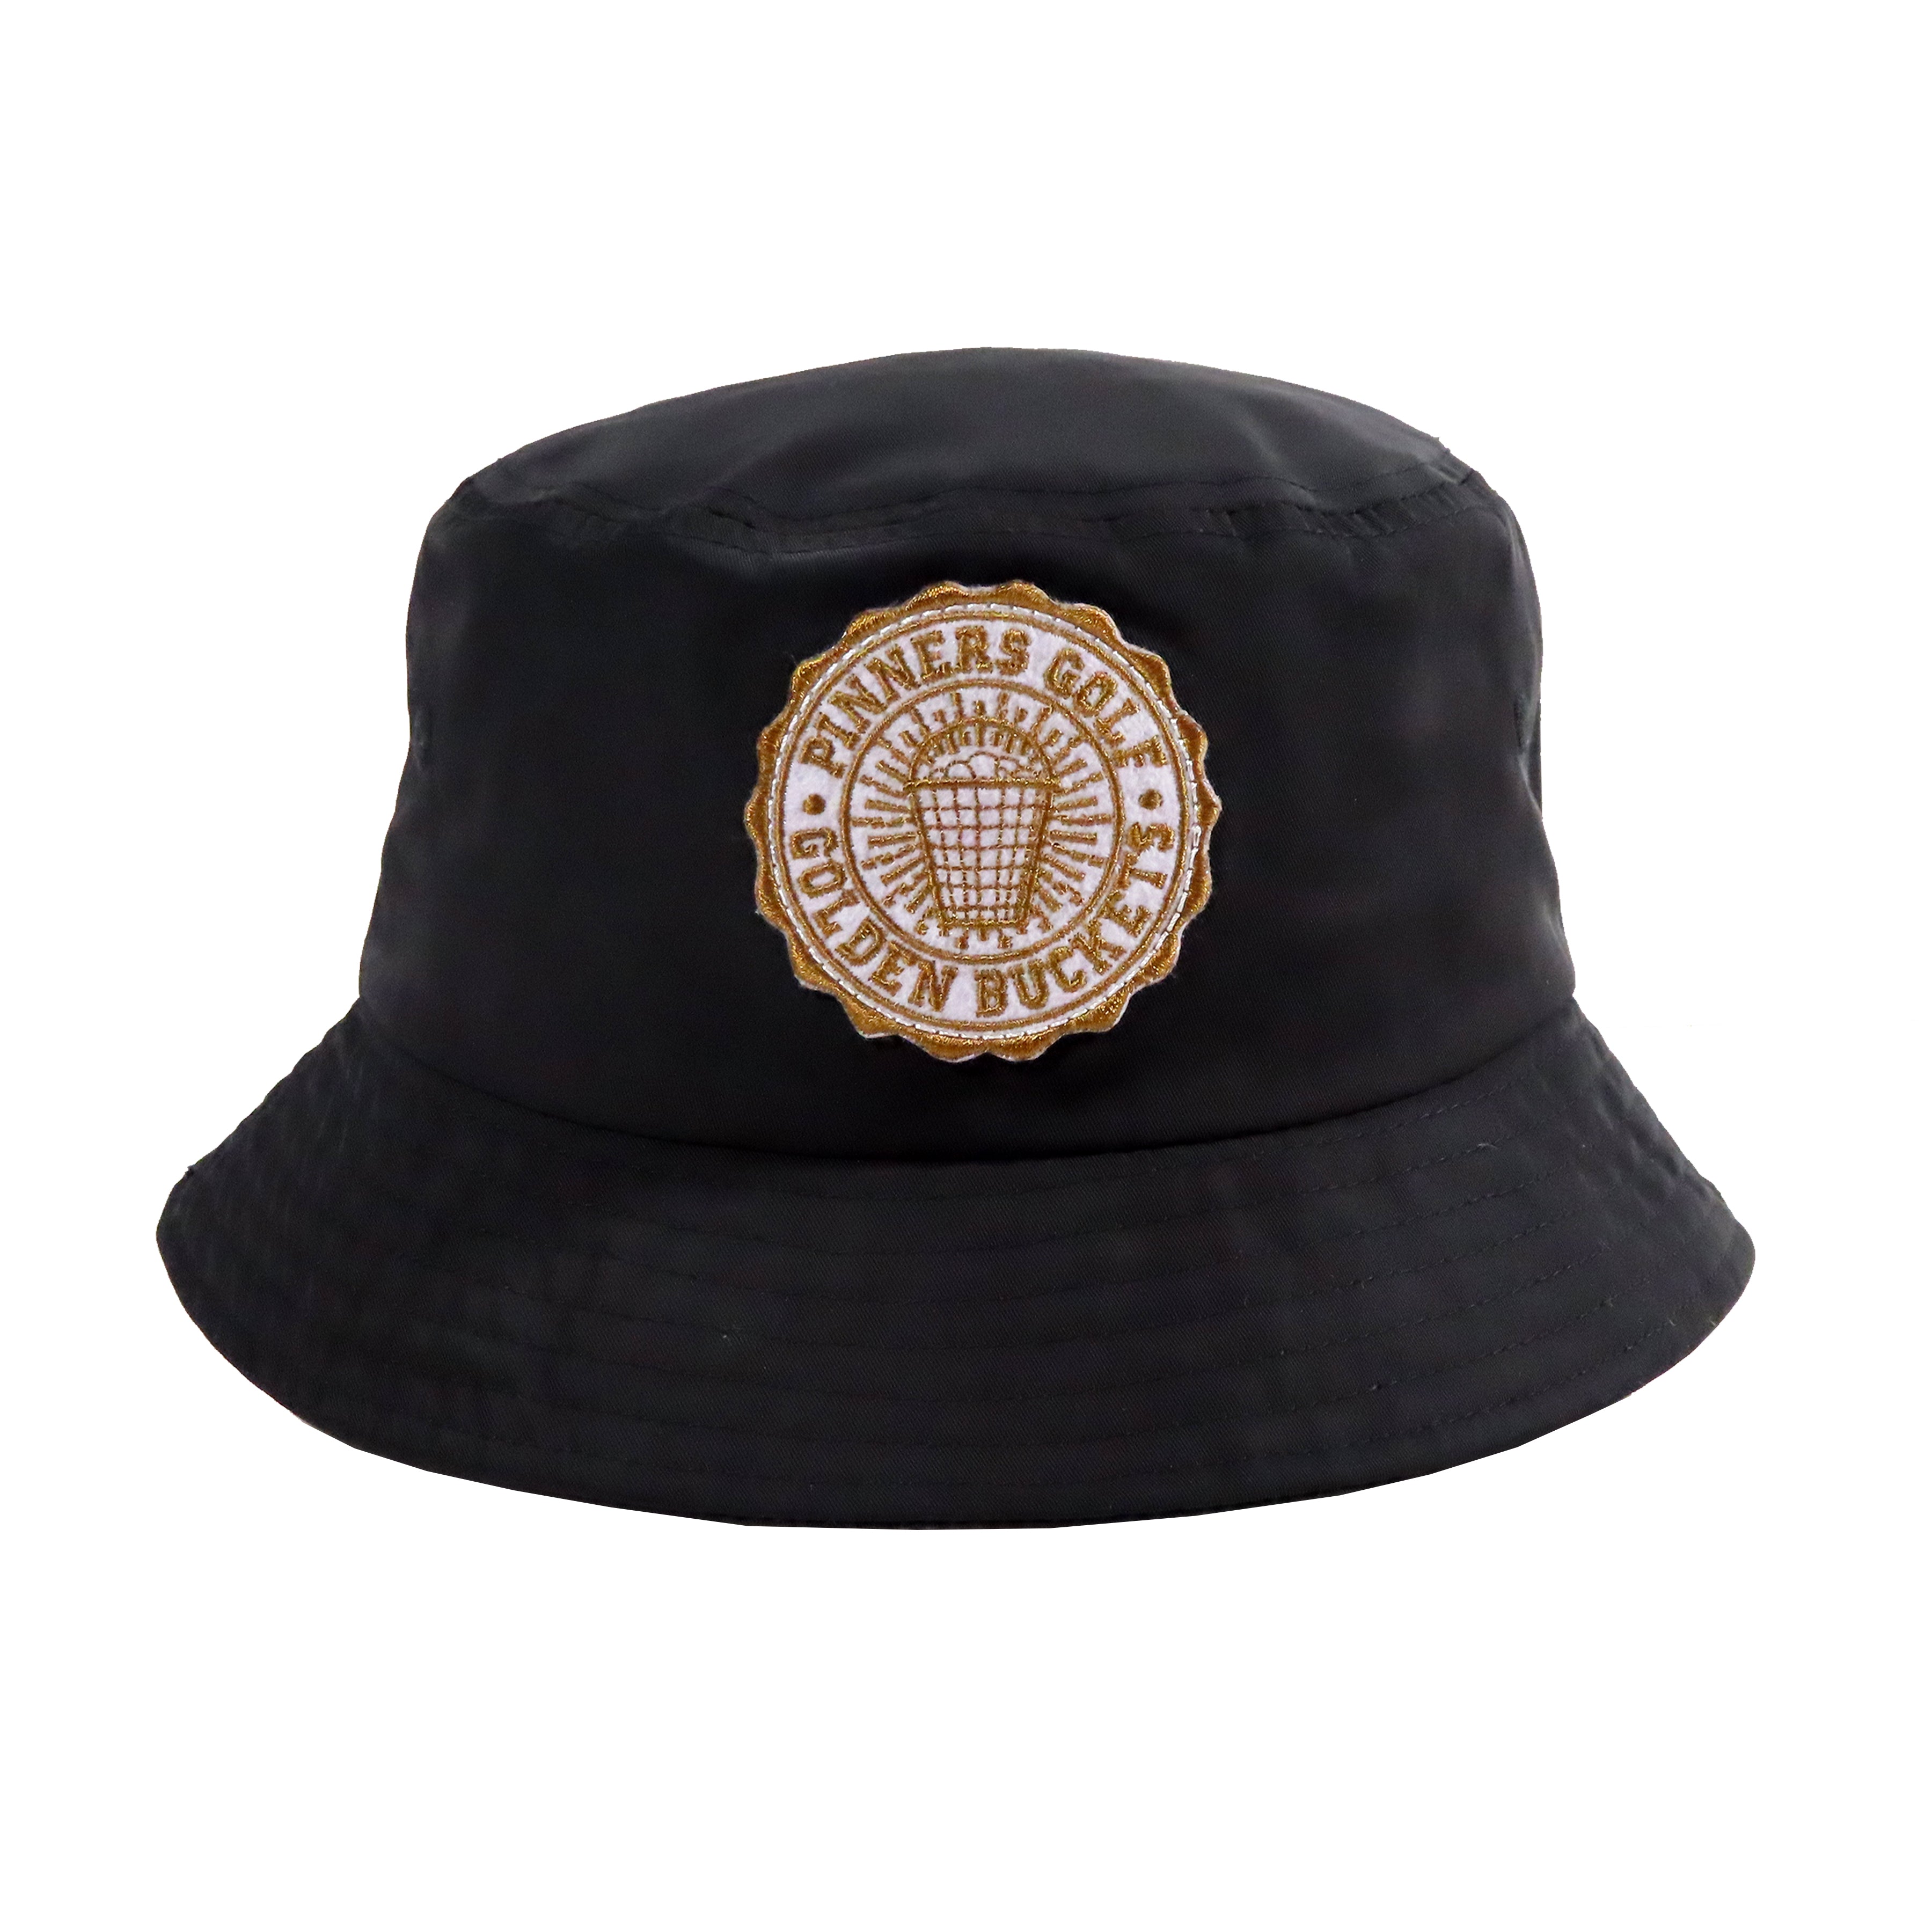 Pinner's Golf - Golden Buckets Badge Nylon Bucket Hat (Black)